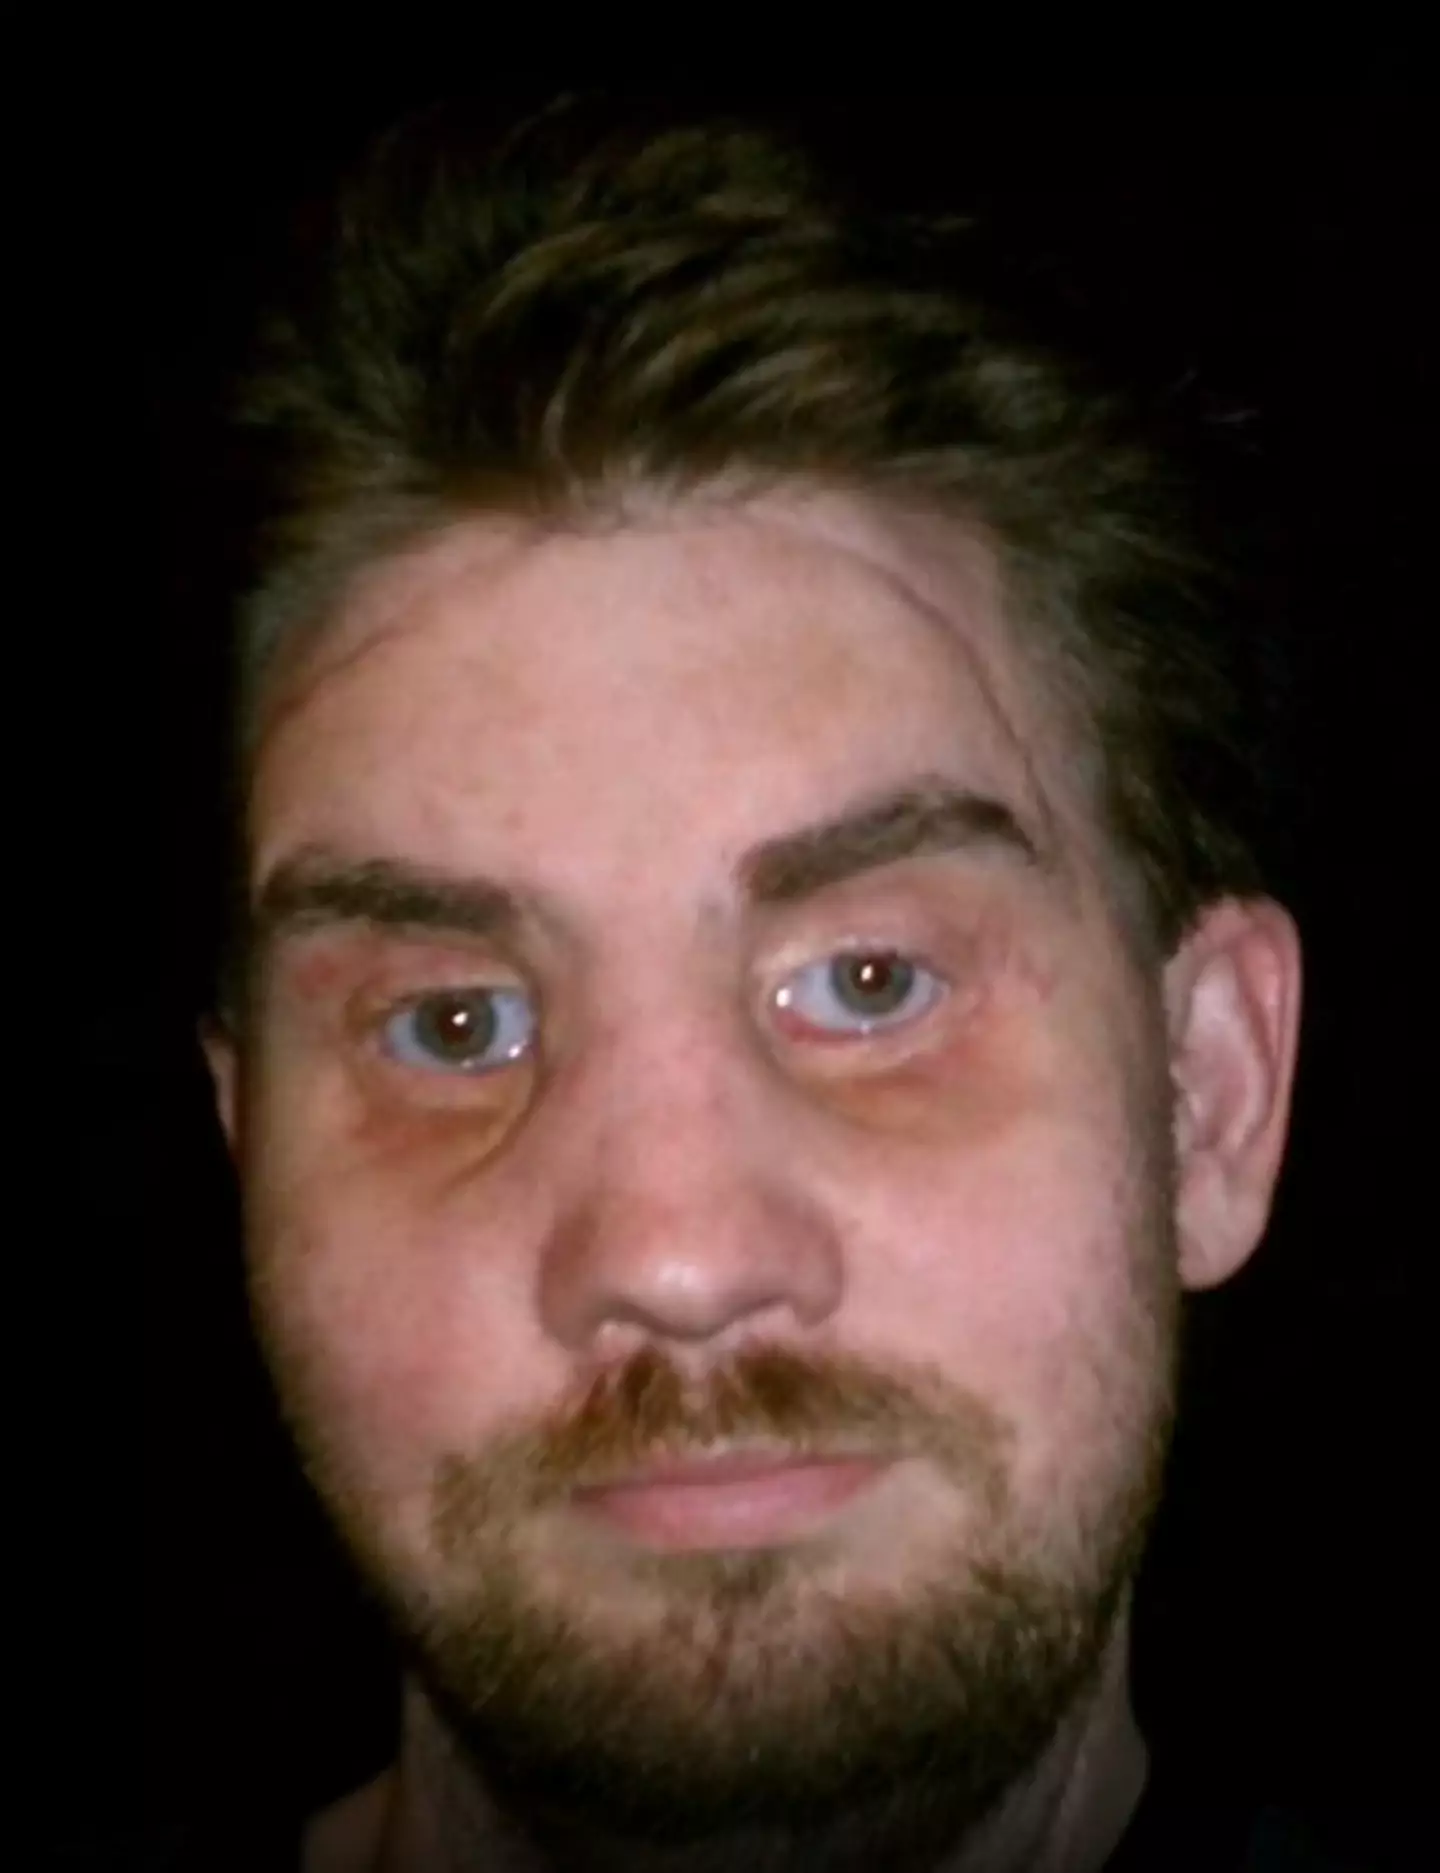 Mitch underwent a face transplant for his children.